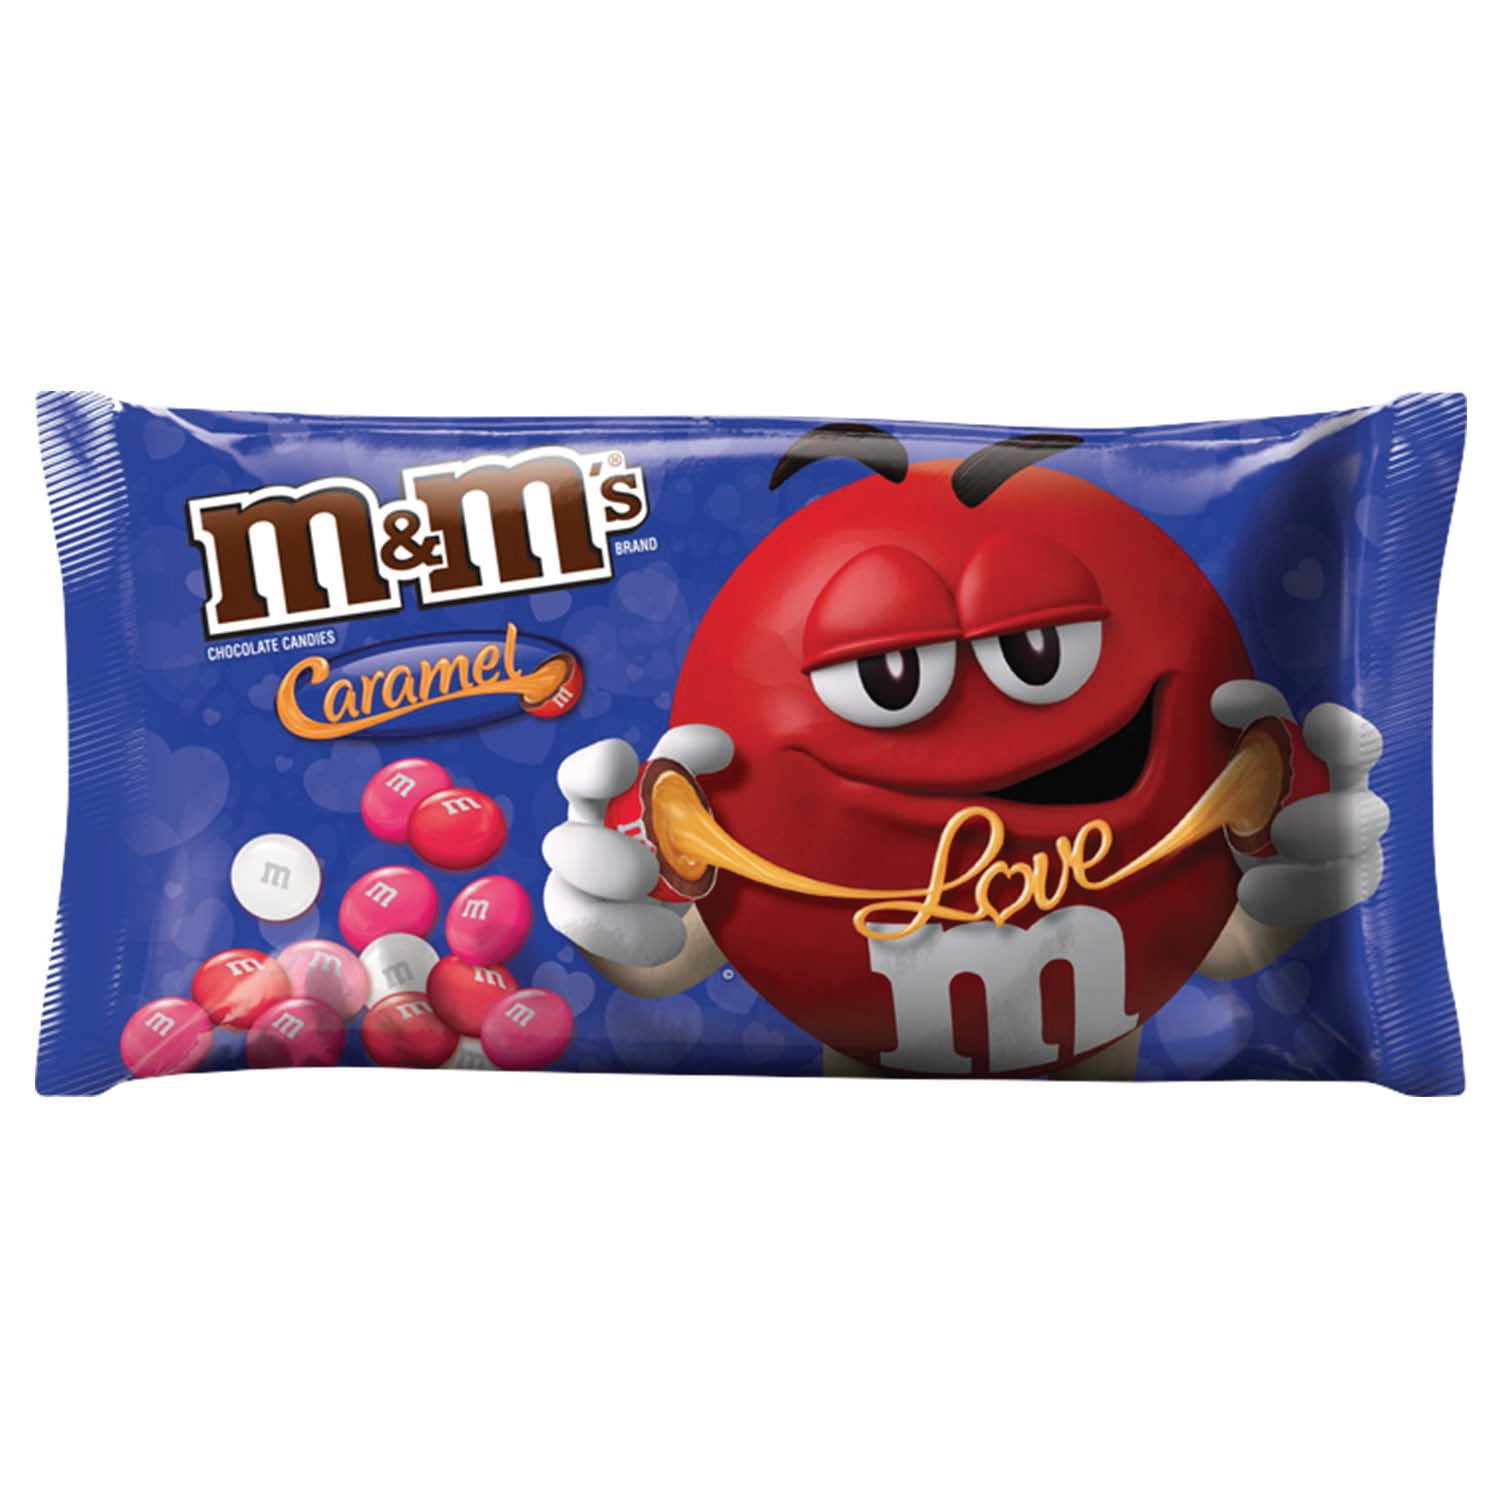 Mars M&M's Valentine's Day Caramel Chocolate Candy, 9.9 Oz.